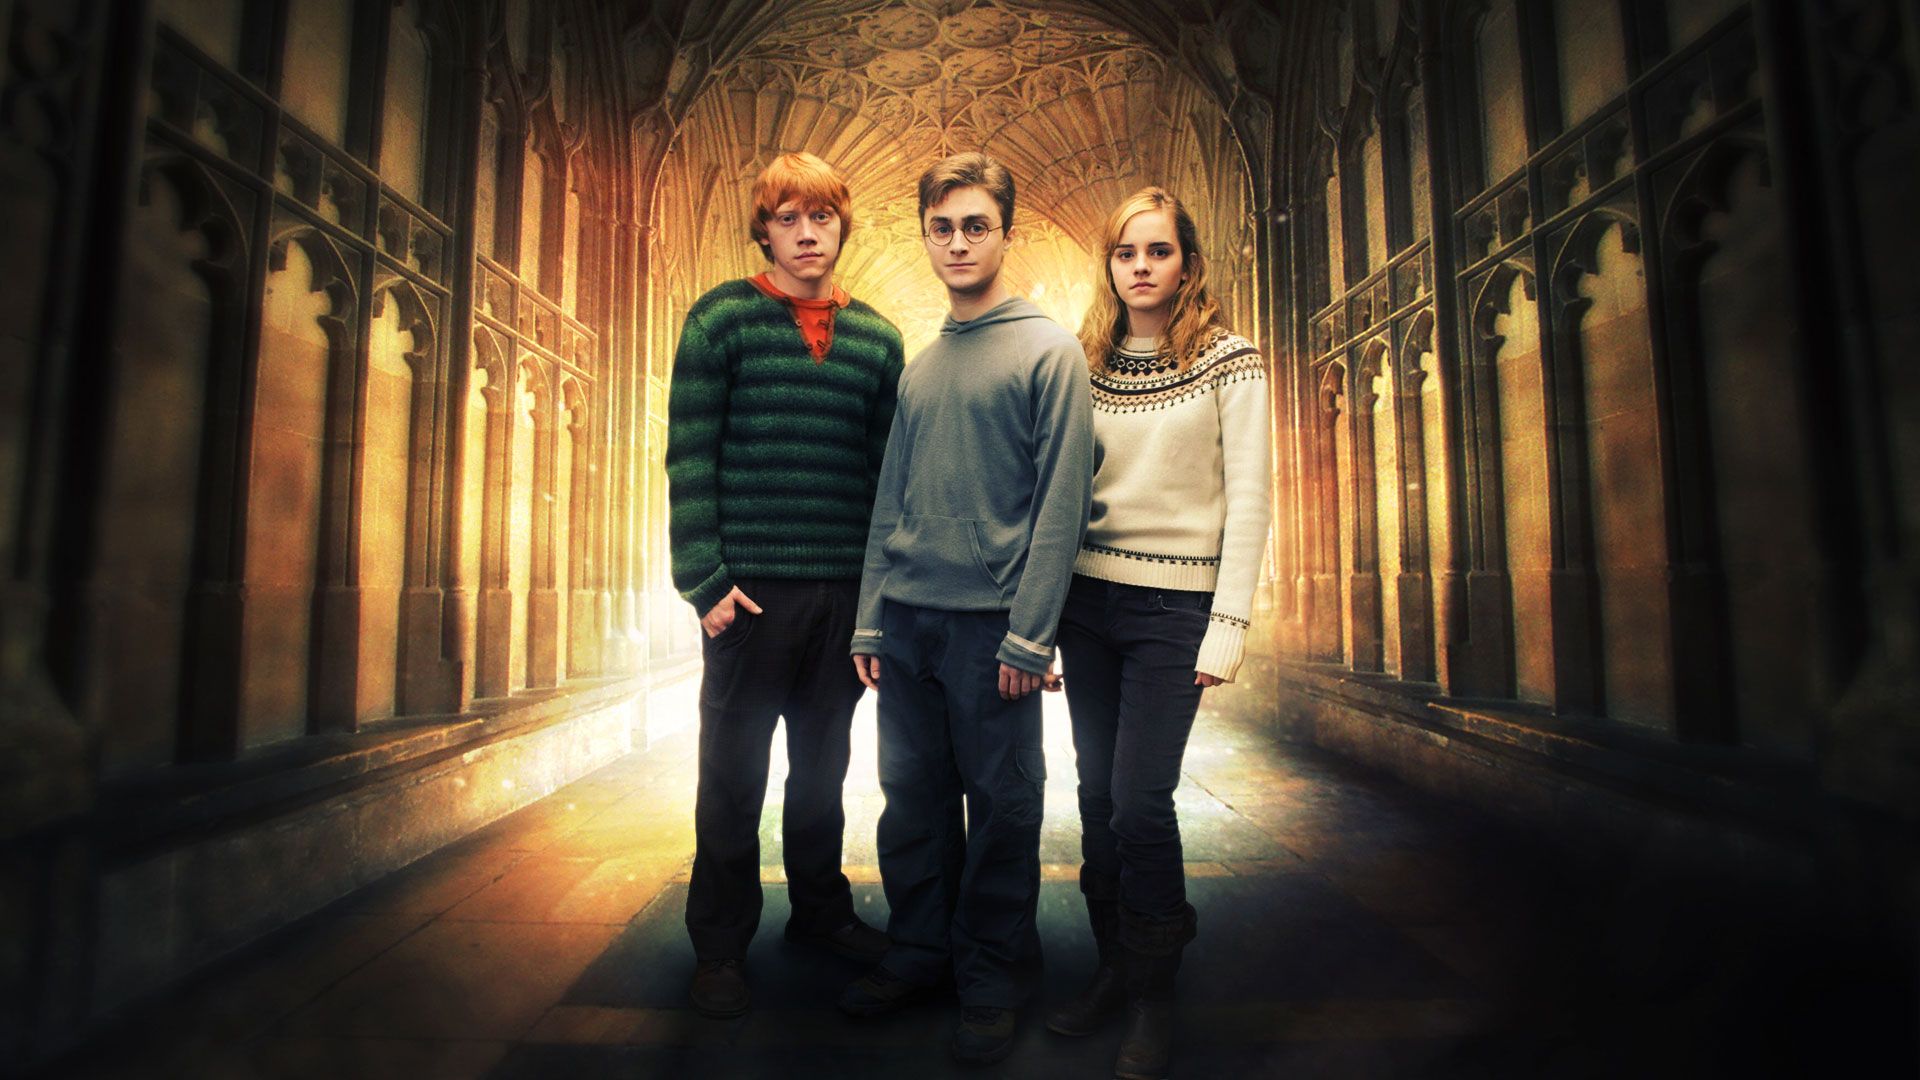 Harry Potter HD Wallpaper